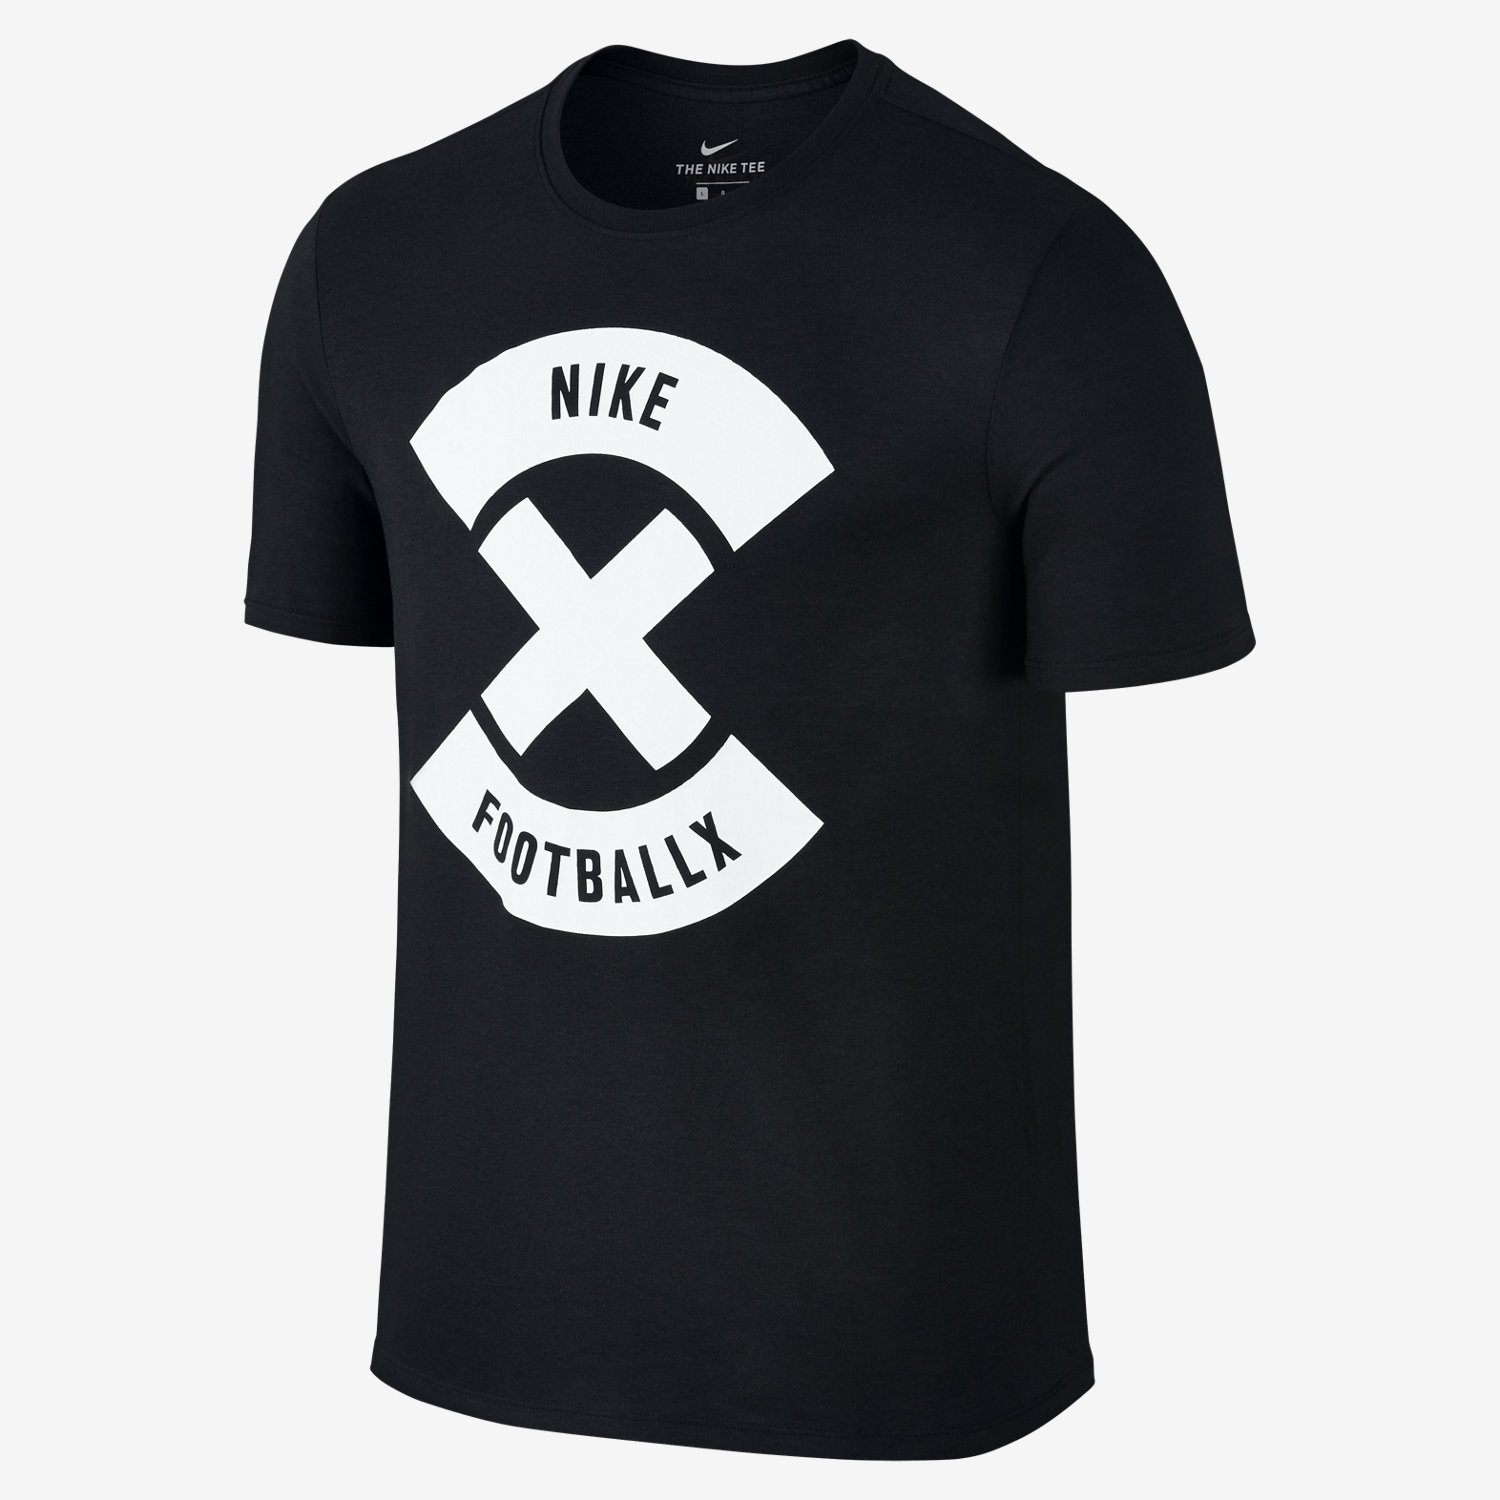 Nike Dry Football X Logo - Men's T-Shirt